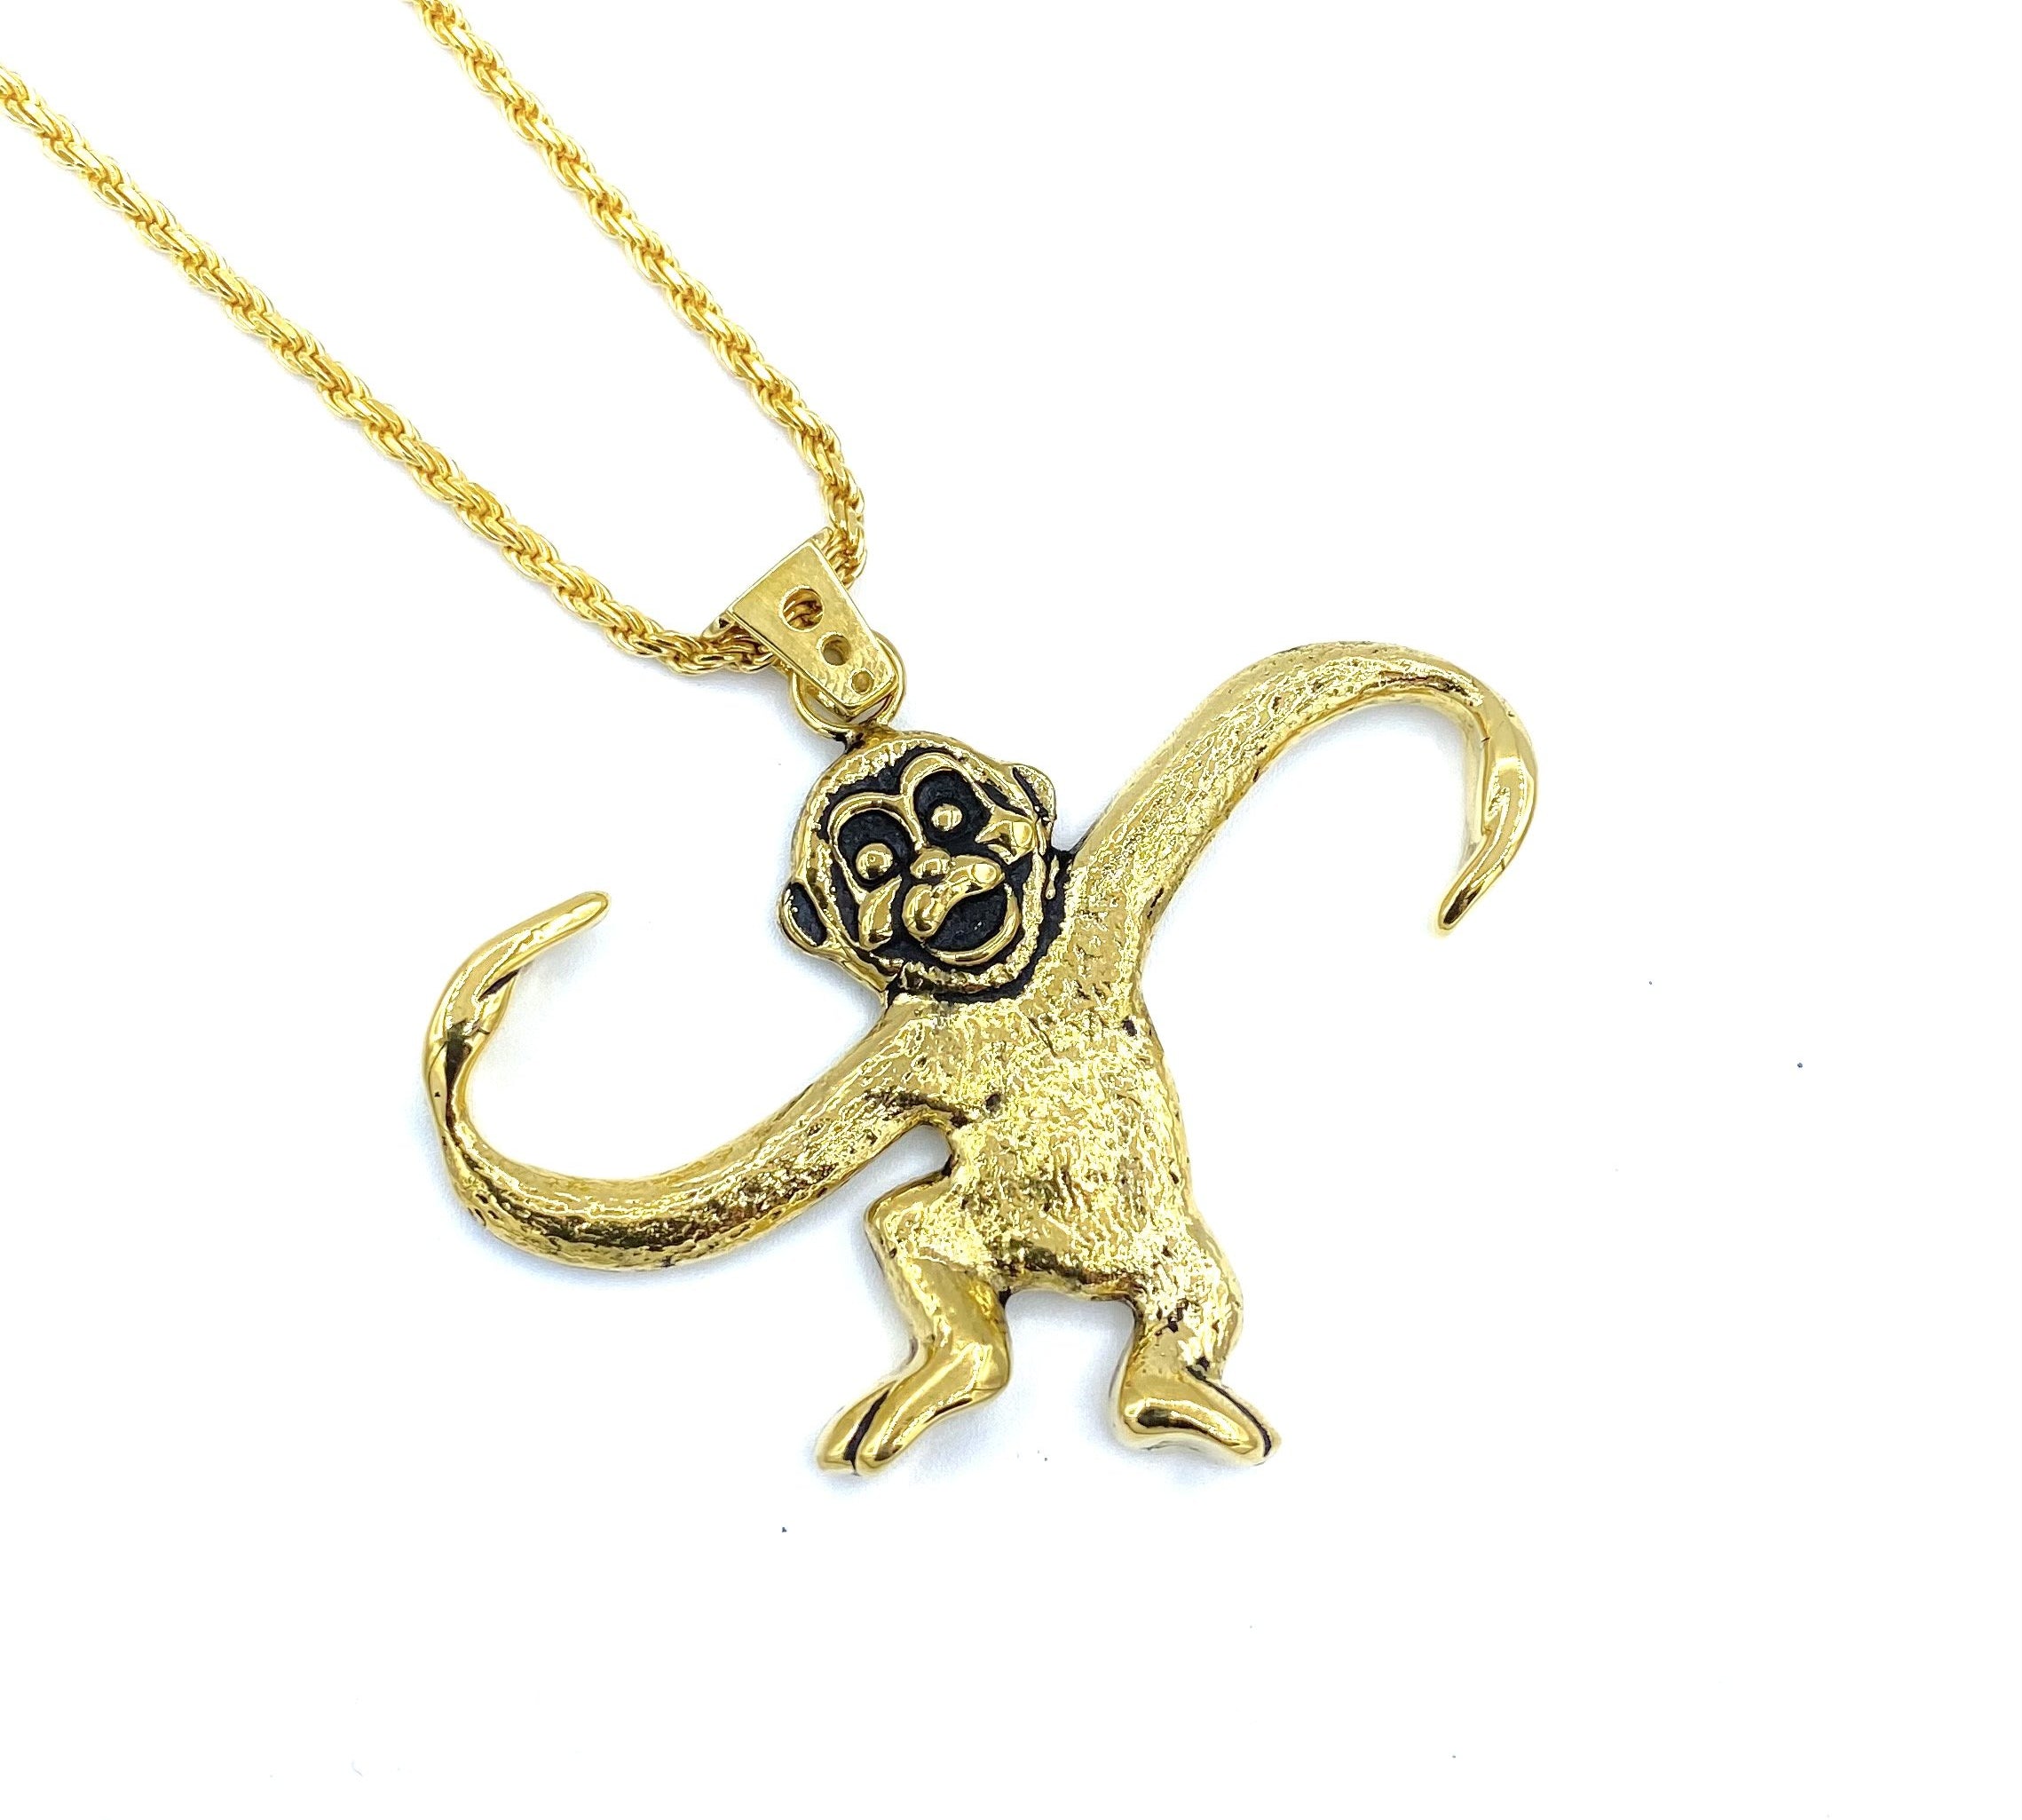 Single Monkey Pendant pm necklaces Precious Metals Vermeil - 24k Gold Plated 